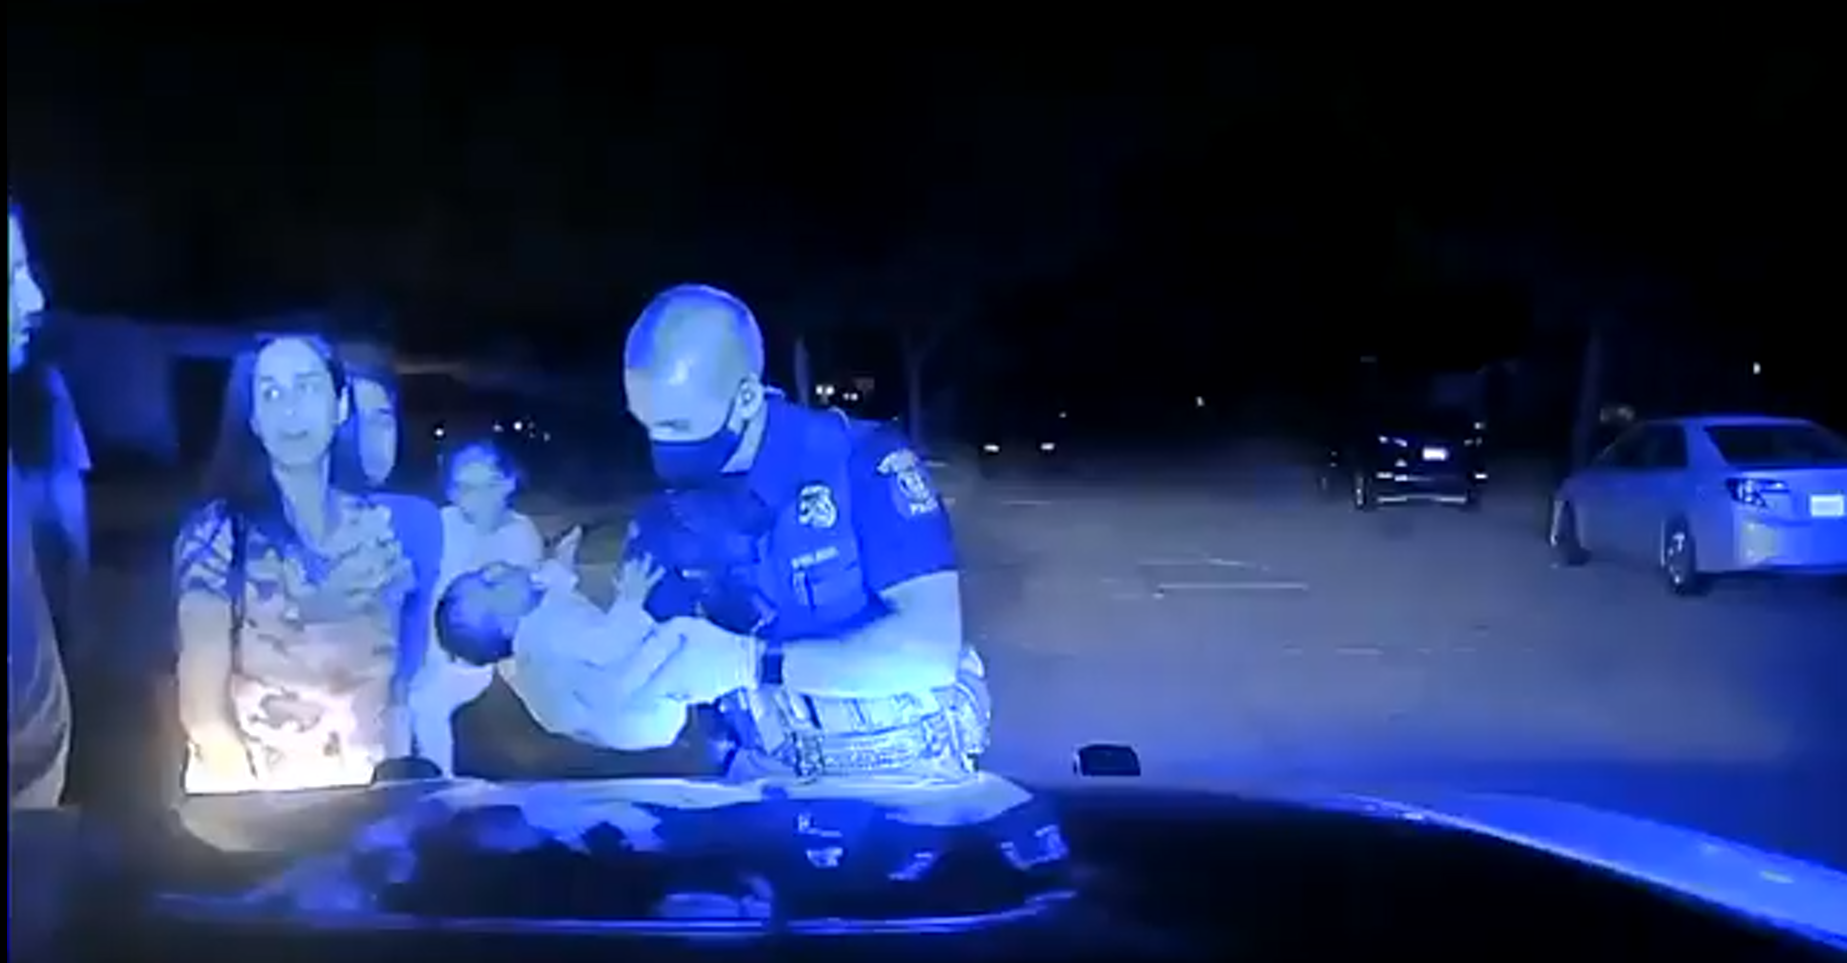 Michigan Police Officer Praised as ‘True Hero’ After Saving 3-Week-Old Baby from Choking